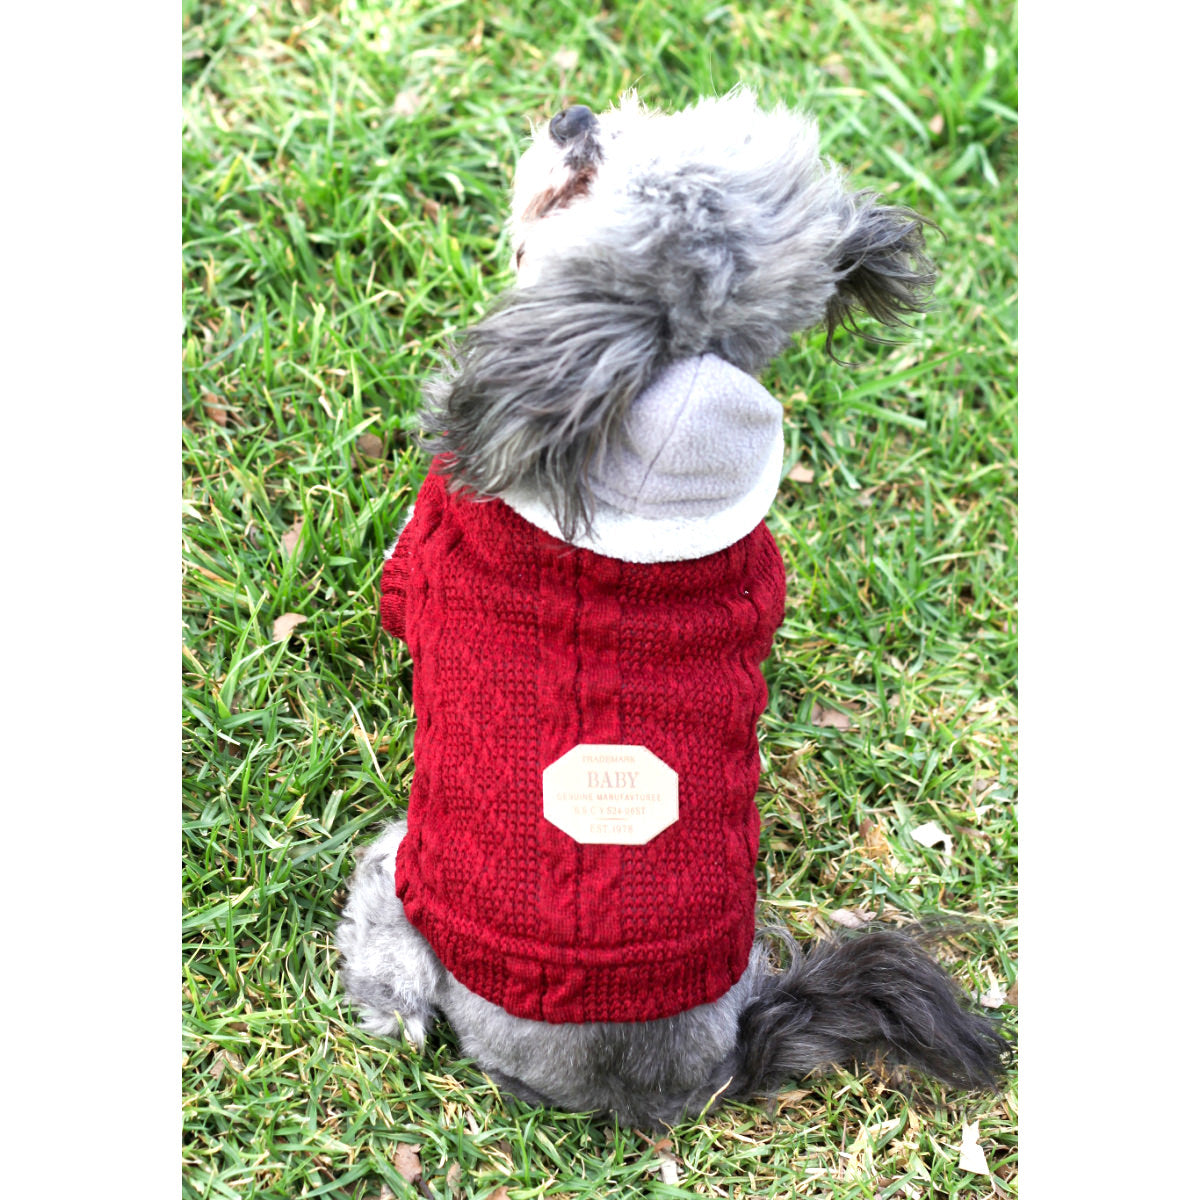 Matching Dog and Owner - Aran Irish Knit Dog Sweater - Dogs